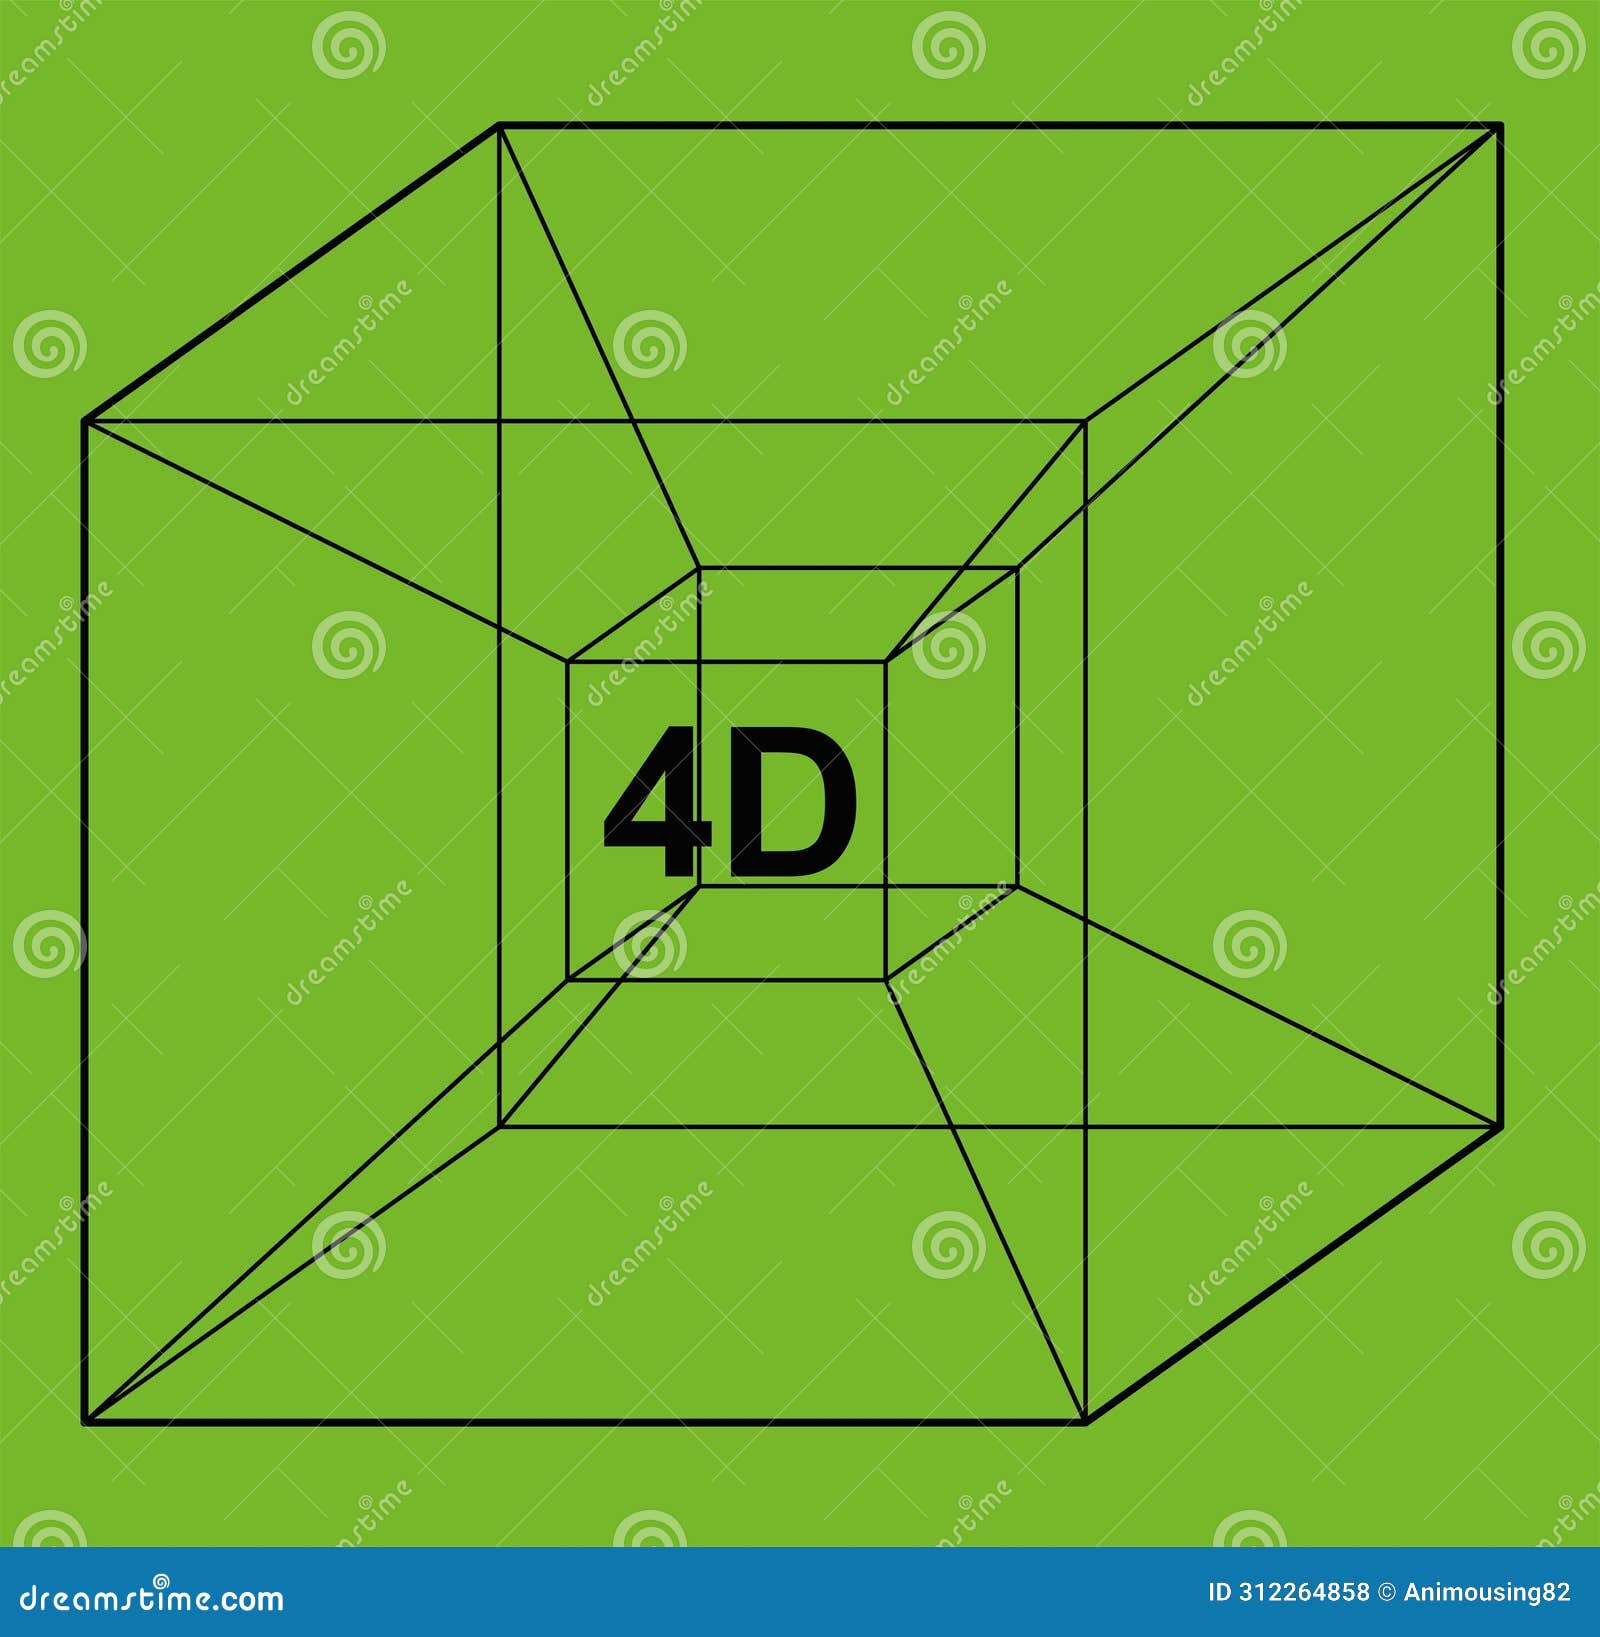  drawing square cube box 4d fourth dimension concept